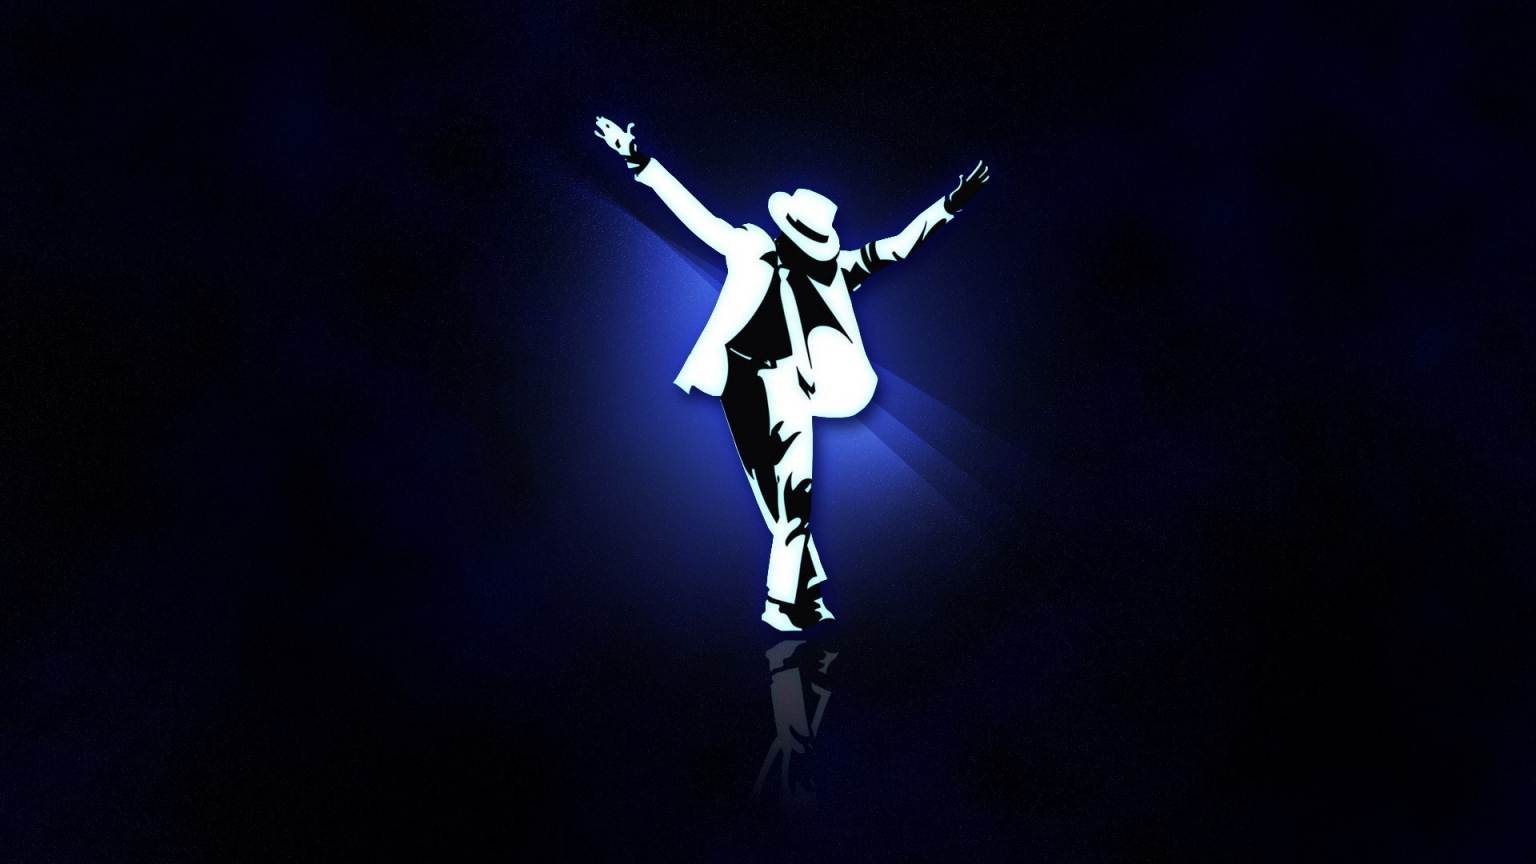 Michael Jackson Tribute for 1536 x 864 HDTV resolution